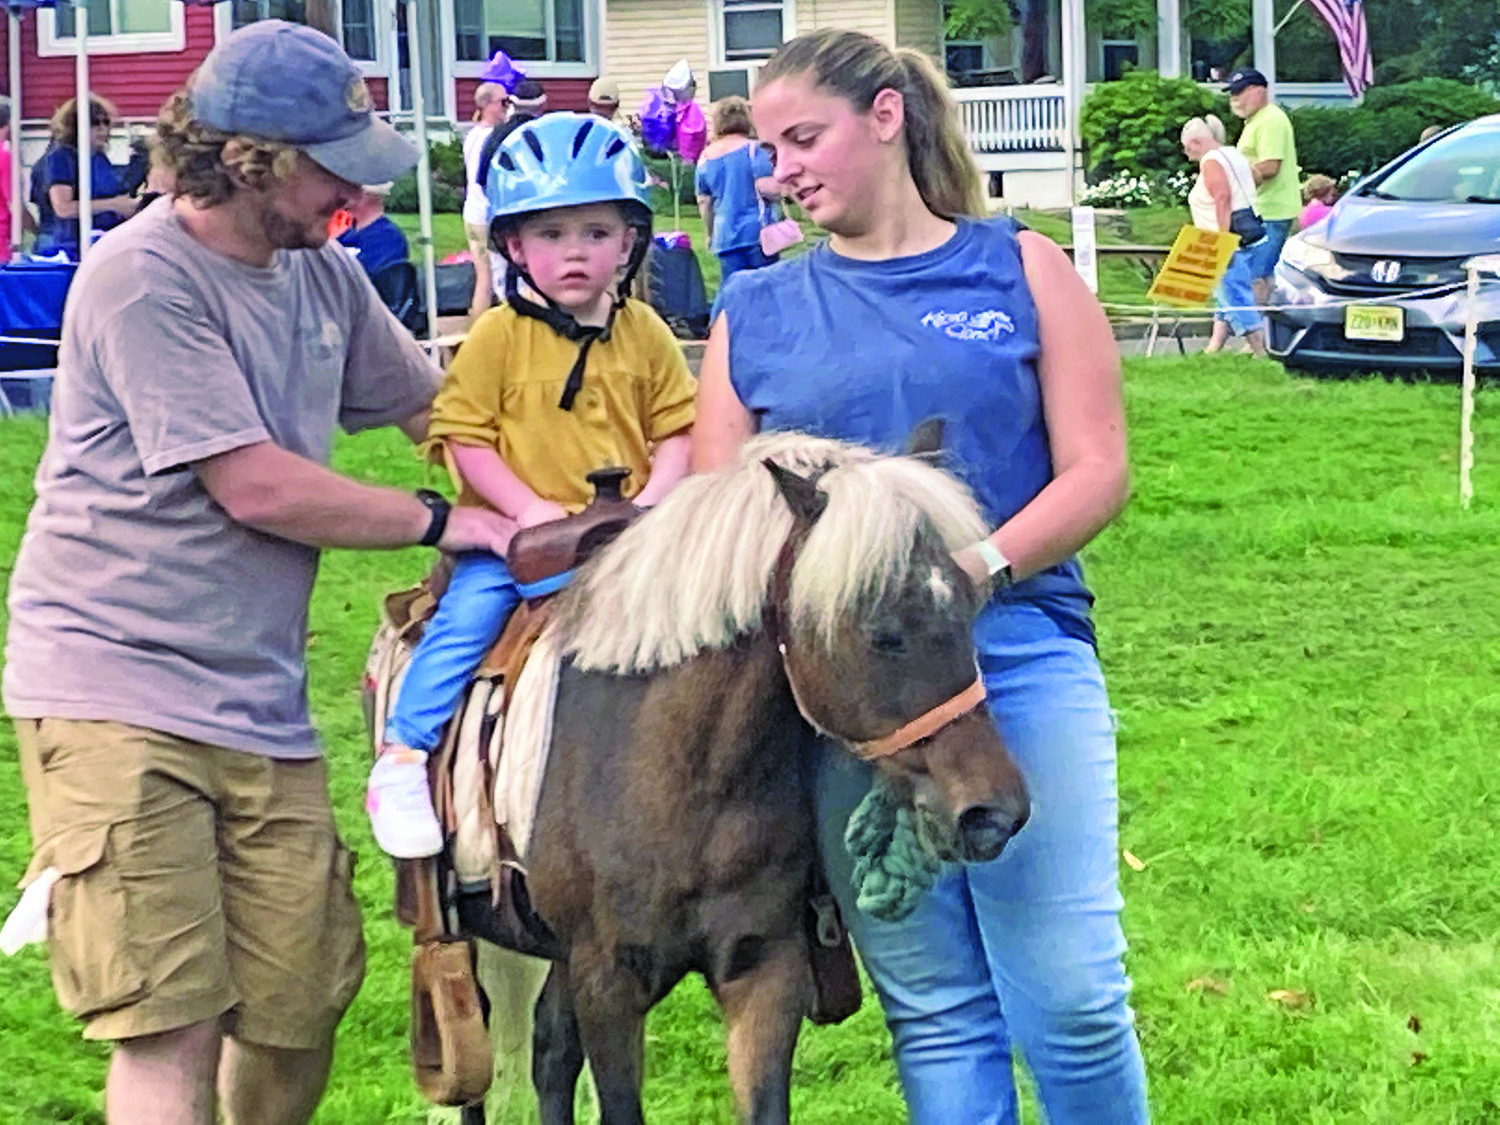 Madison Moleski, 2, of Fairless Hills enjoys a pony ride at Harvest Day in Yardley Borough. Guiding the mount is Jason Mulligan, left, and Madison Zuczek of Keona Farms in Stockton, N.J.